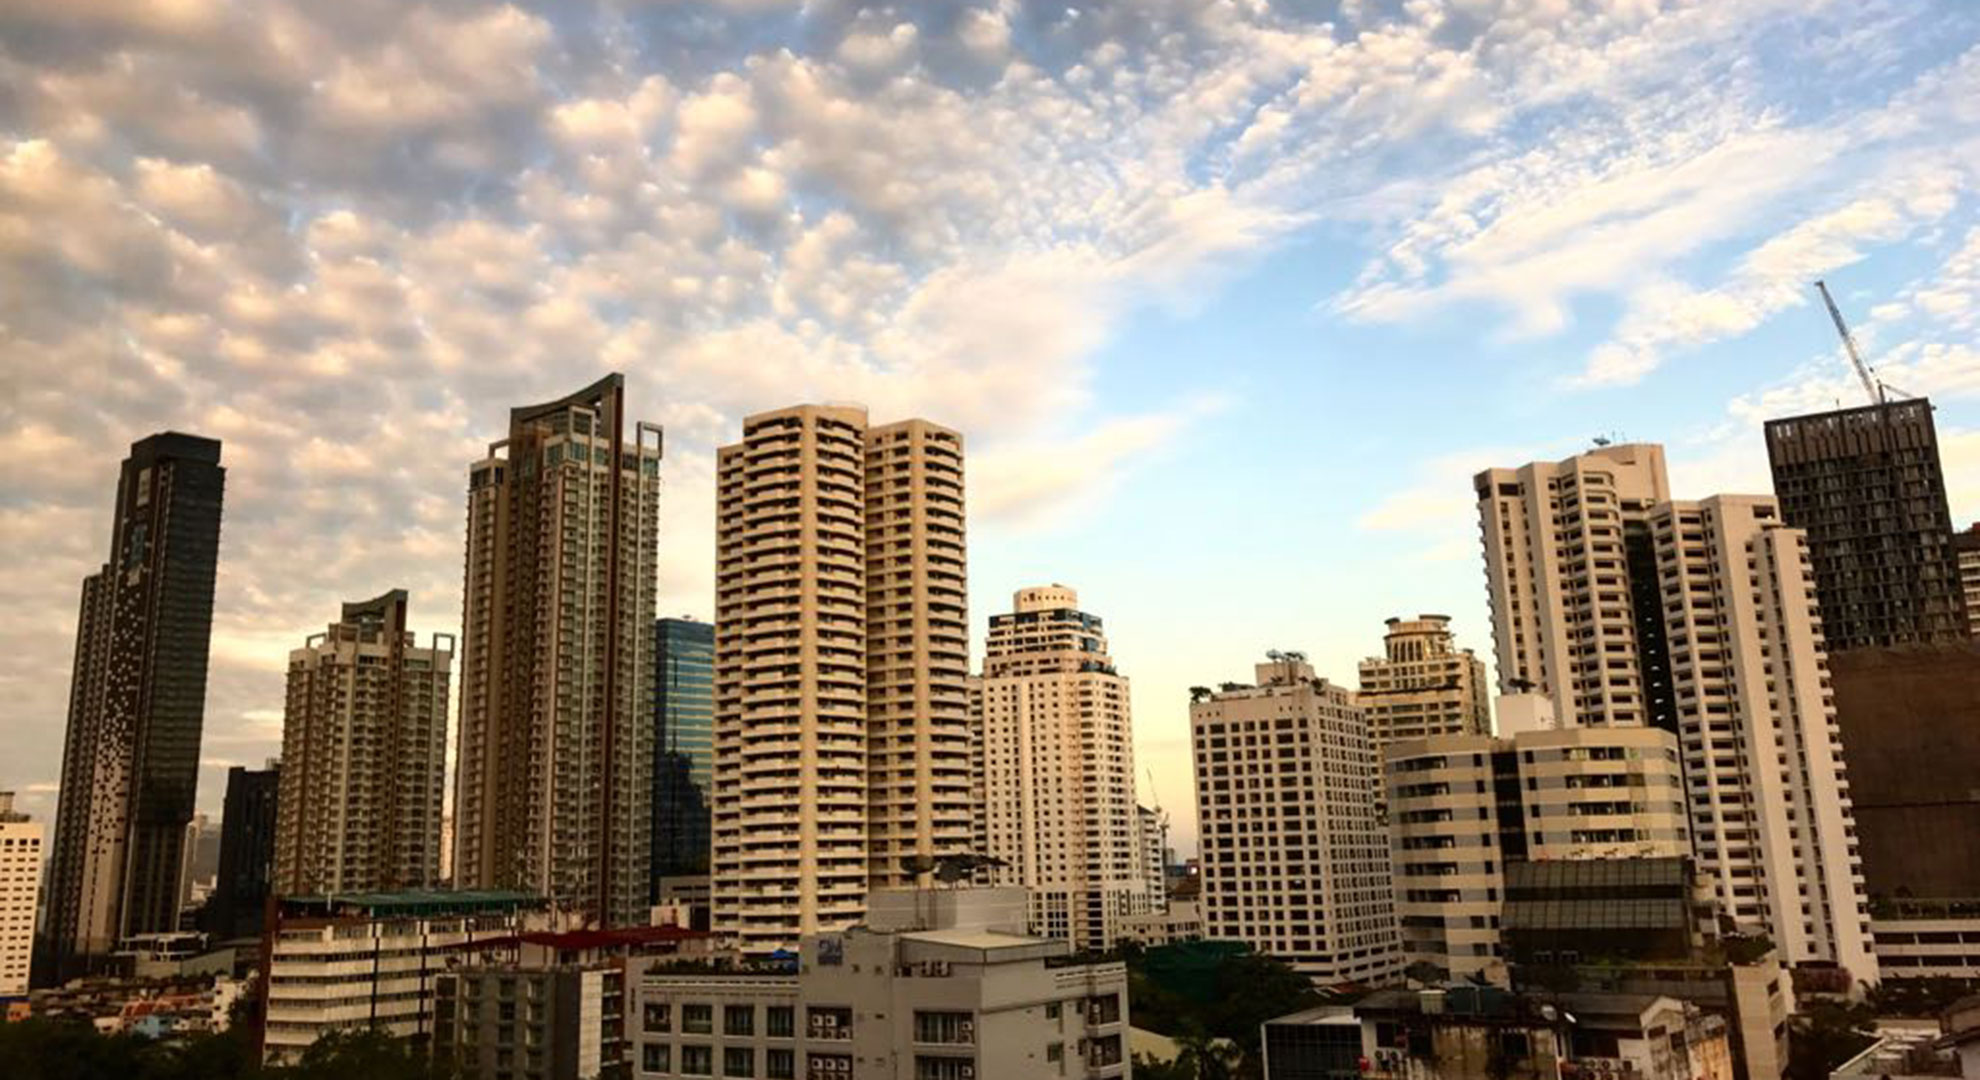 Bangkok-Tipps für Skeptiker | Bangkok with a view | www.dearlicious.com